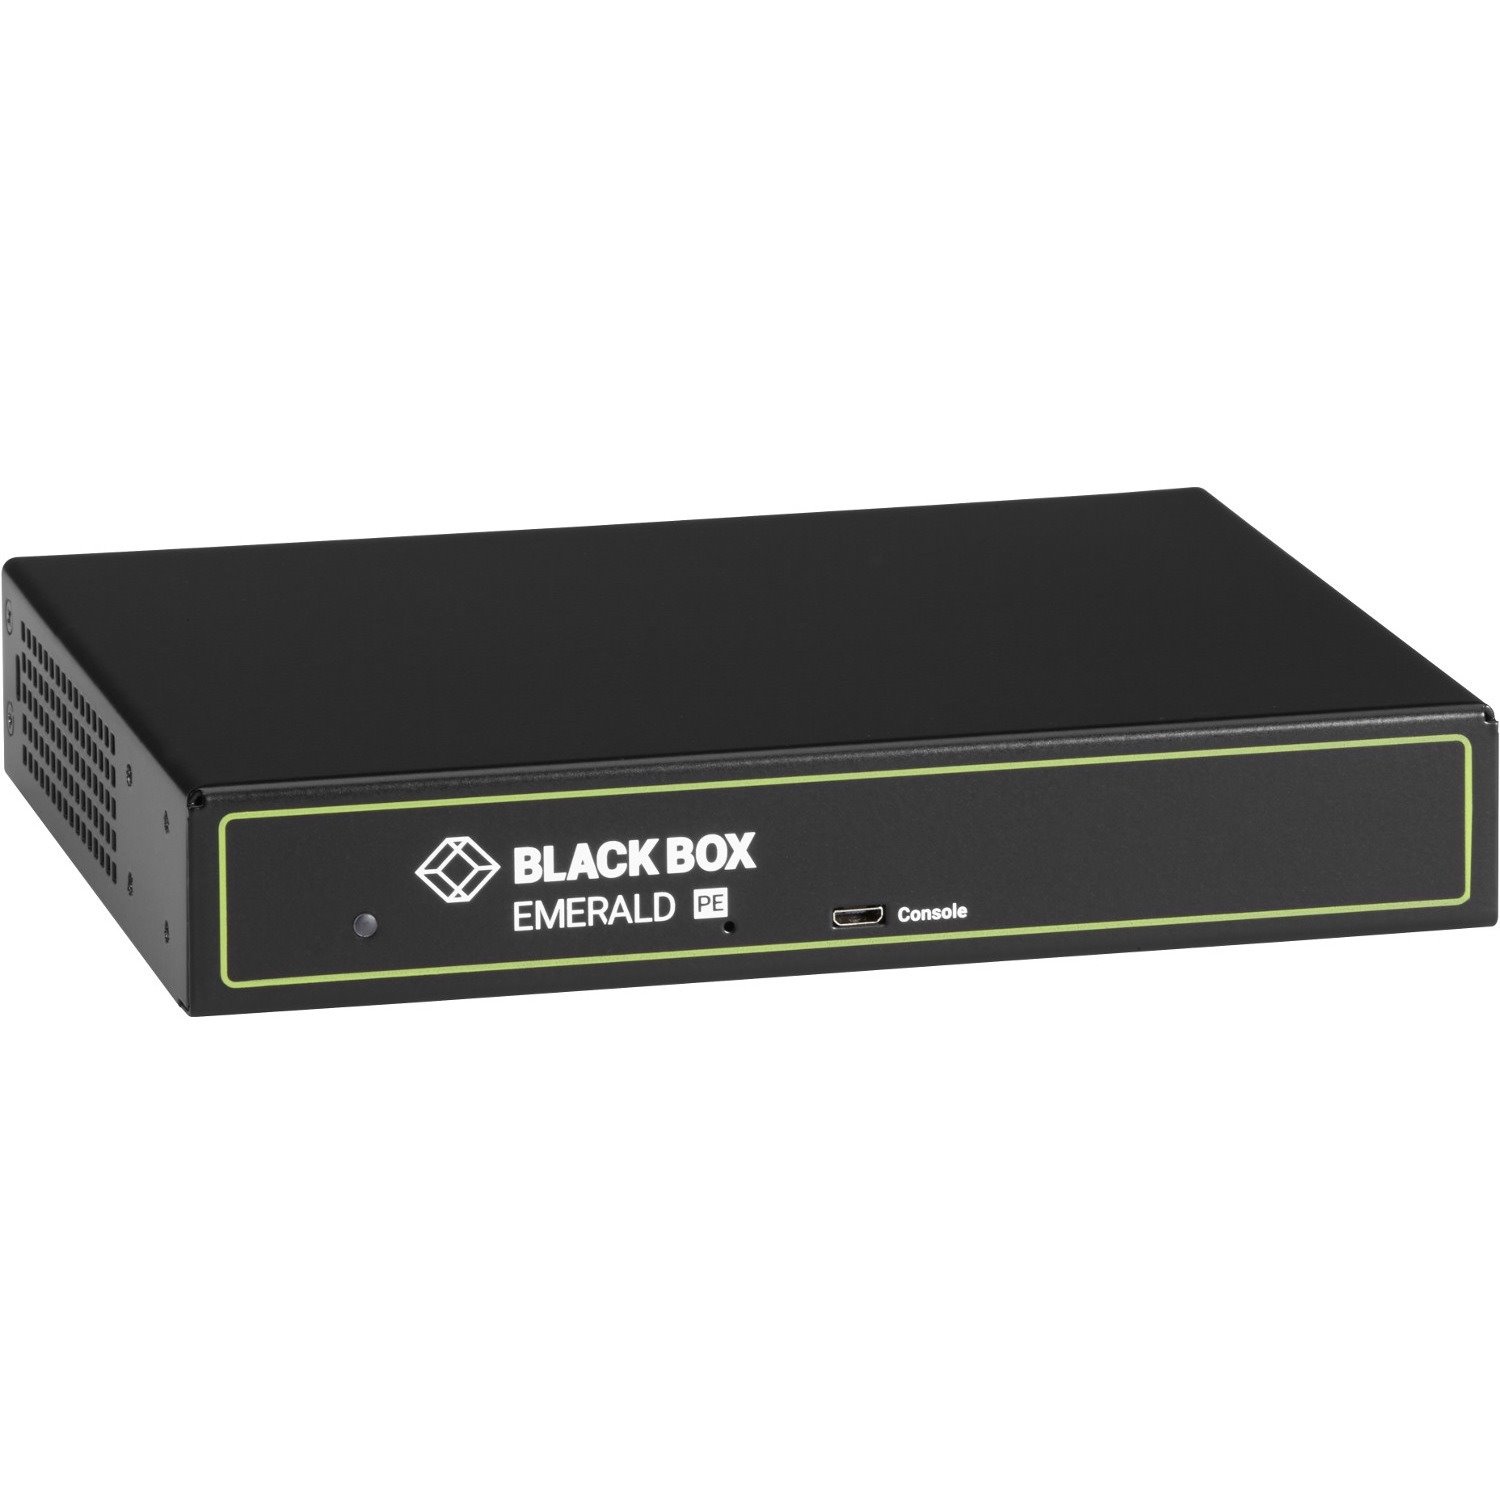 Black Box Emerald PE KVM Extender with Virtual Machine Access - DVI-D, V-USB 2.0, Audio